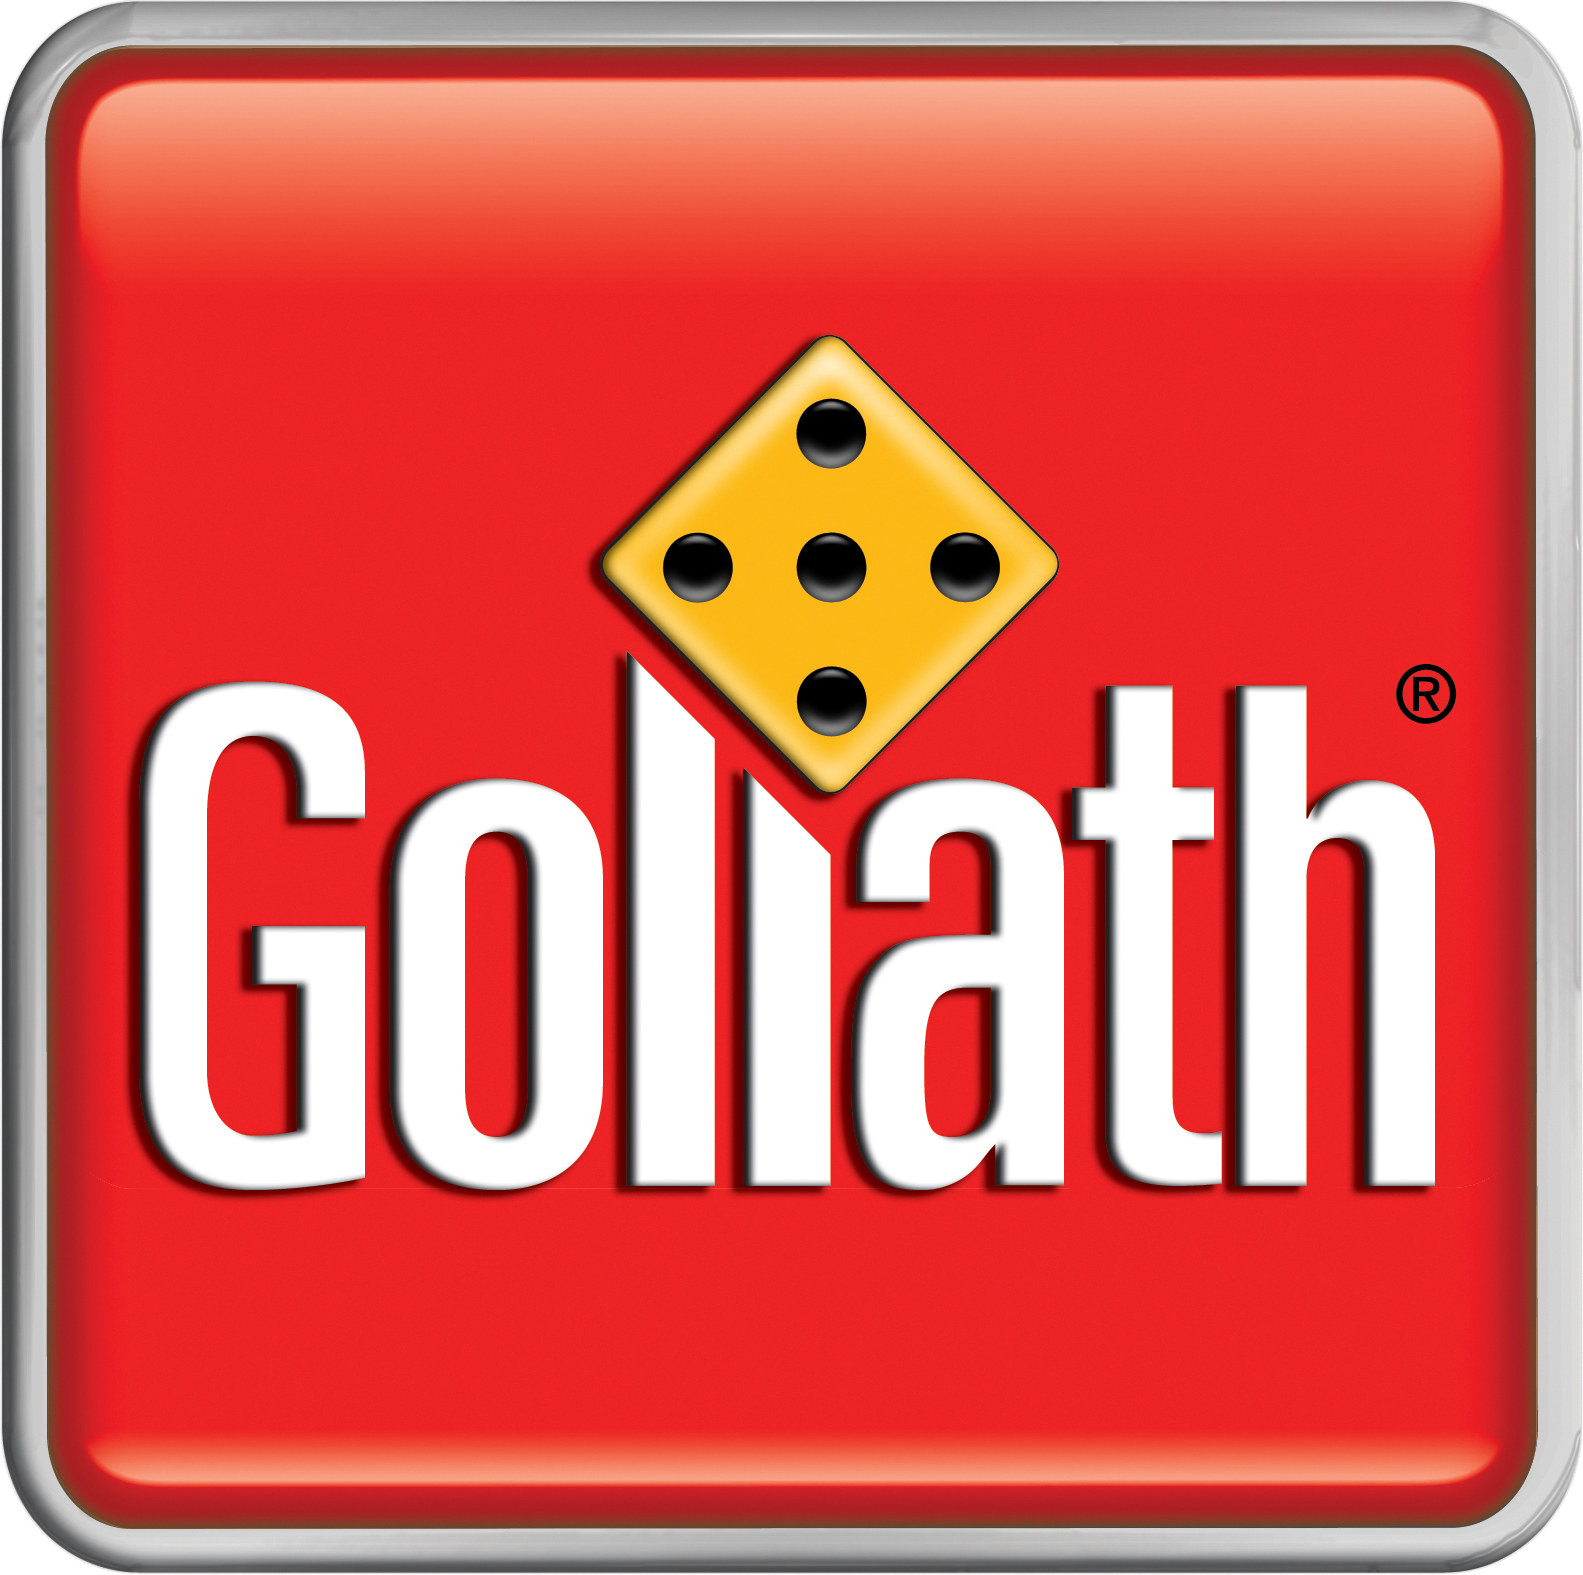 Goliath Games